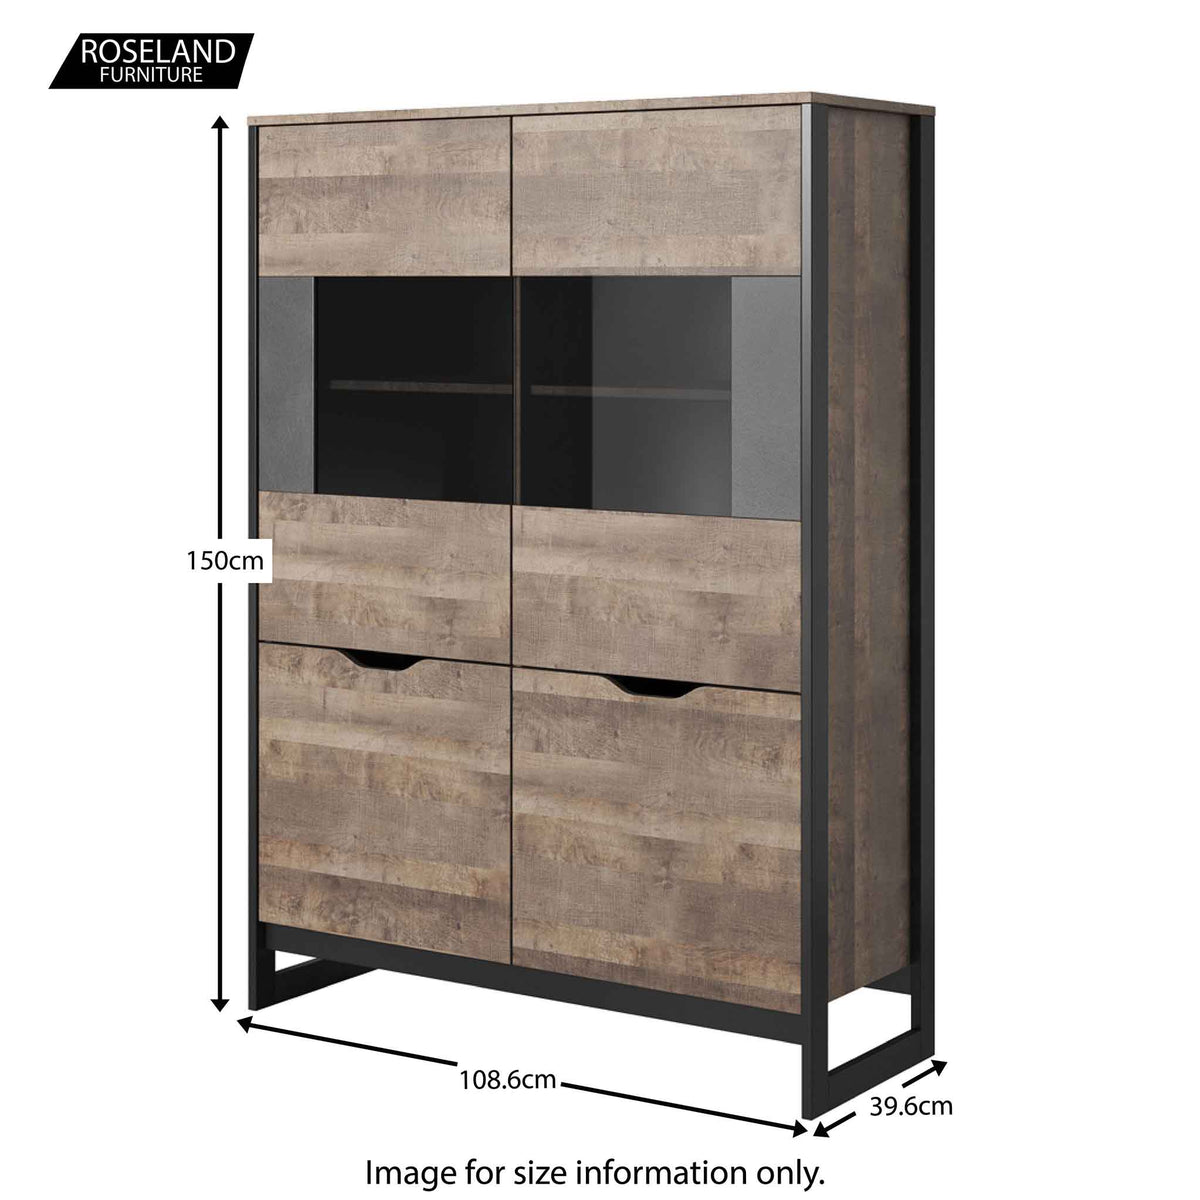 Ezra Industrial Oak Effect Display Cabinet - Size Guide